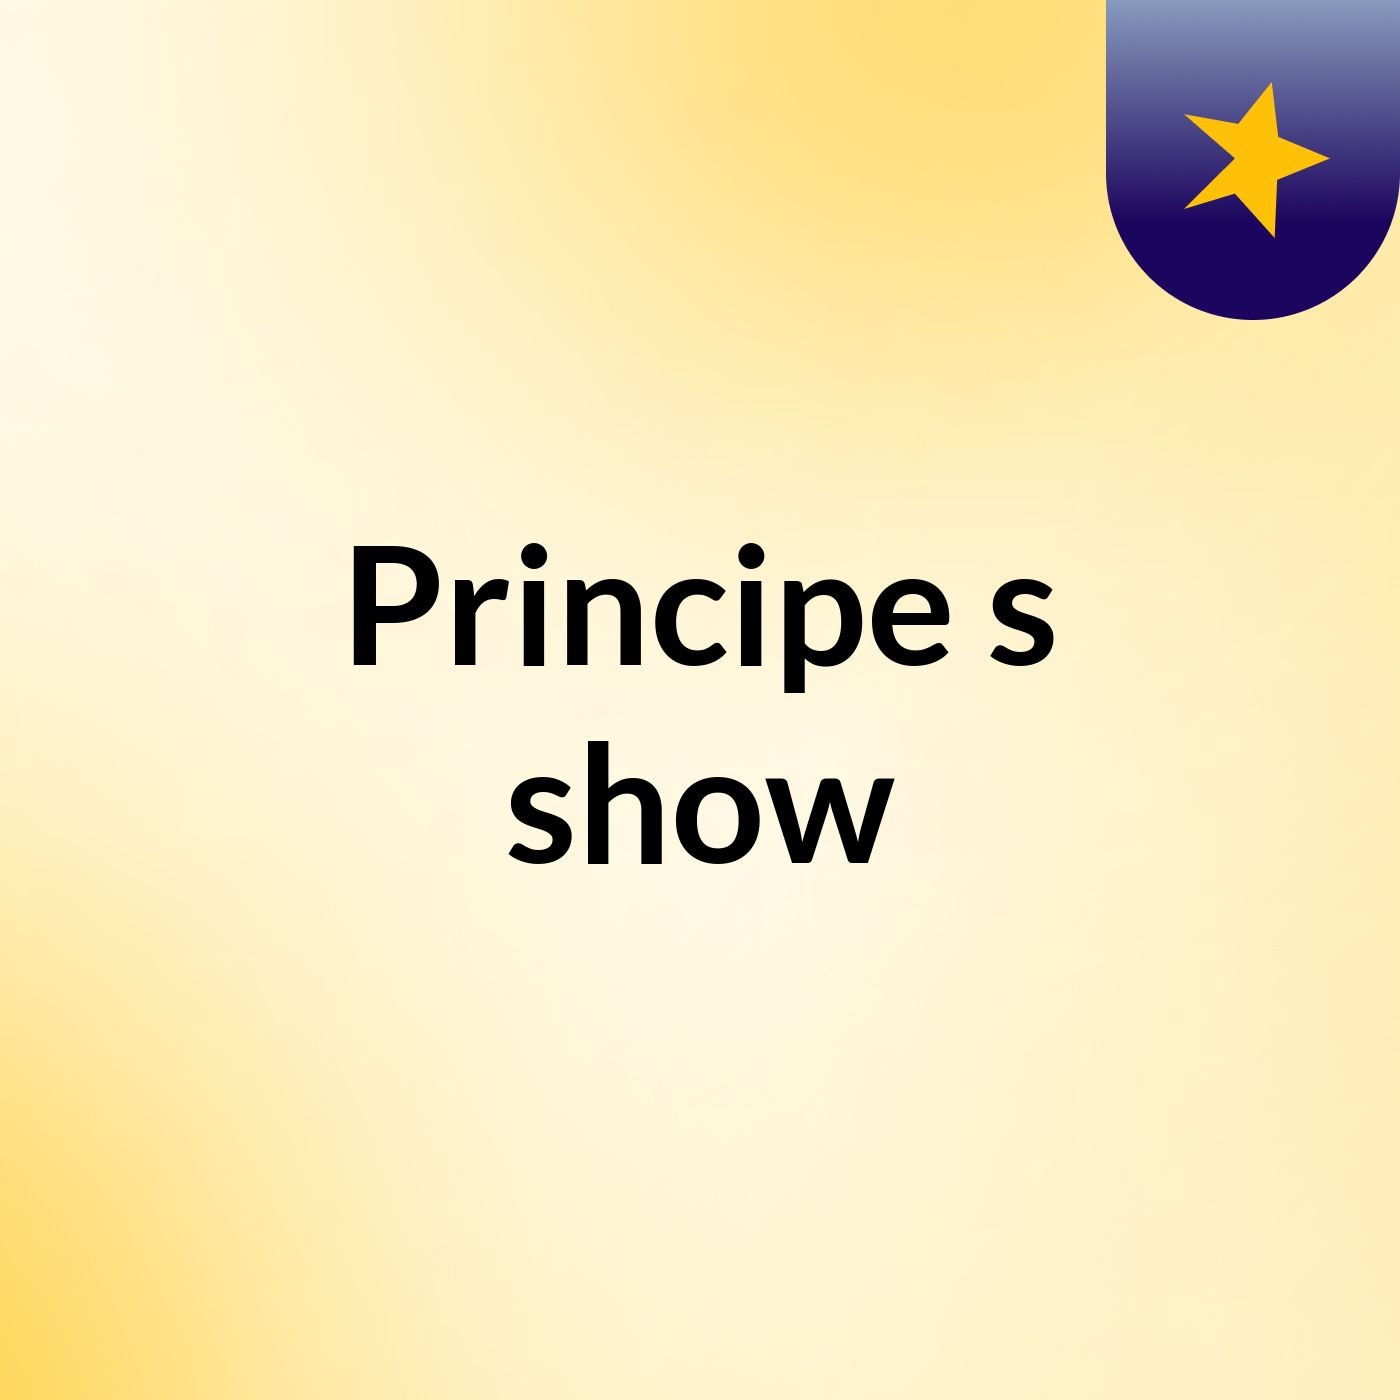 Principe's show